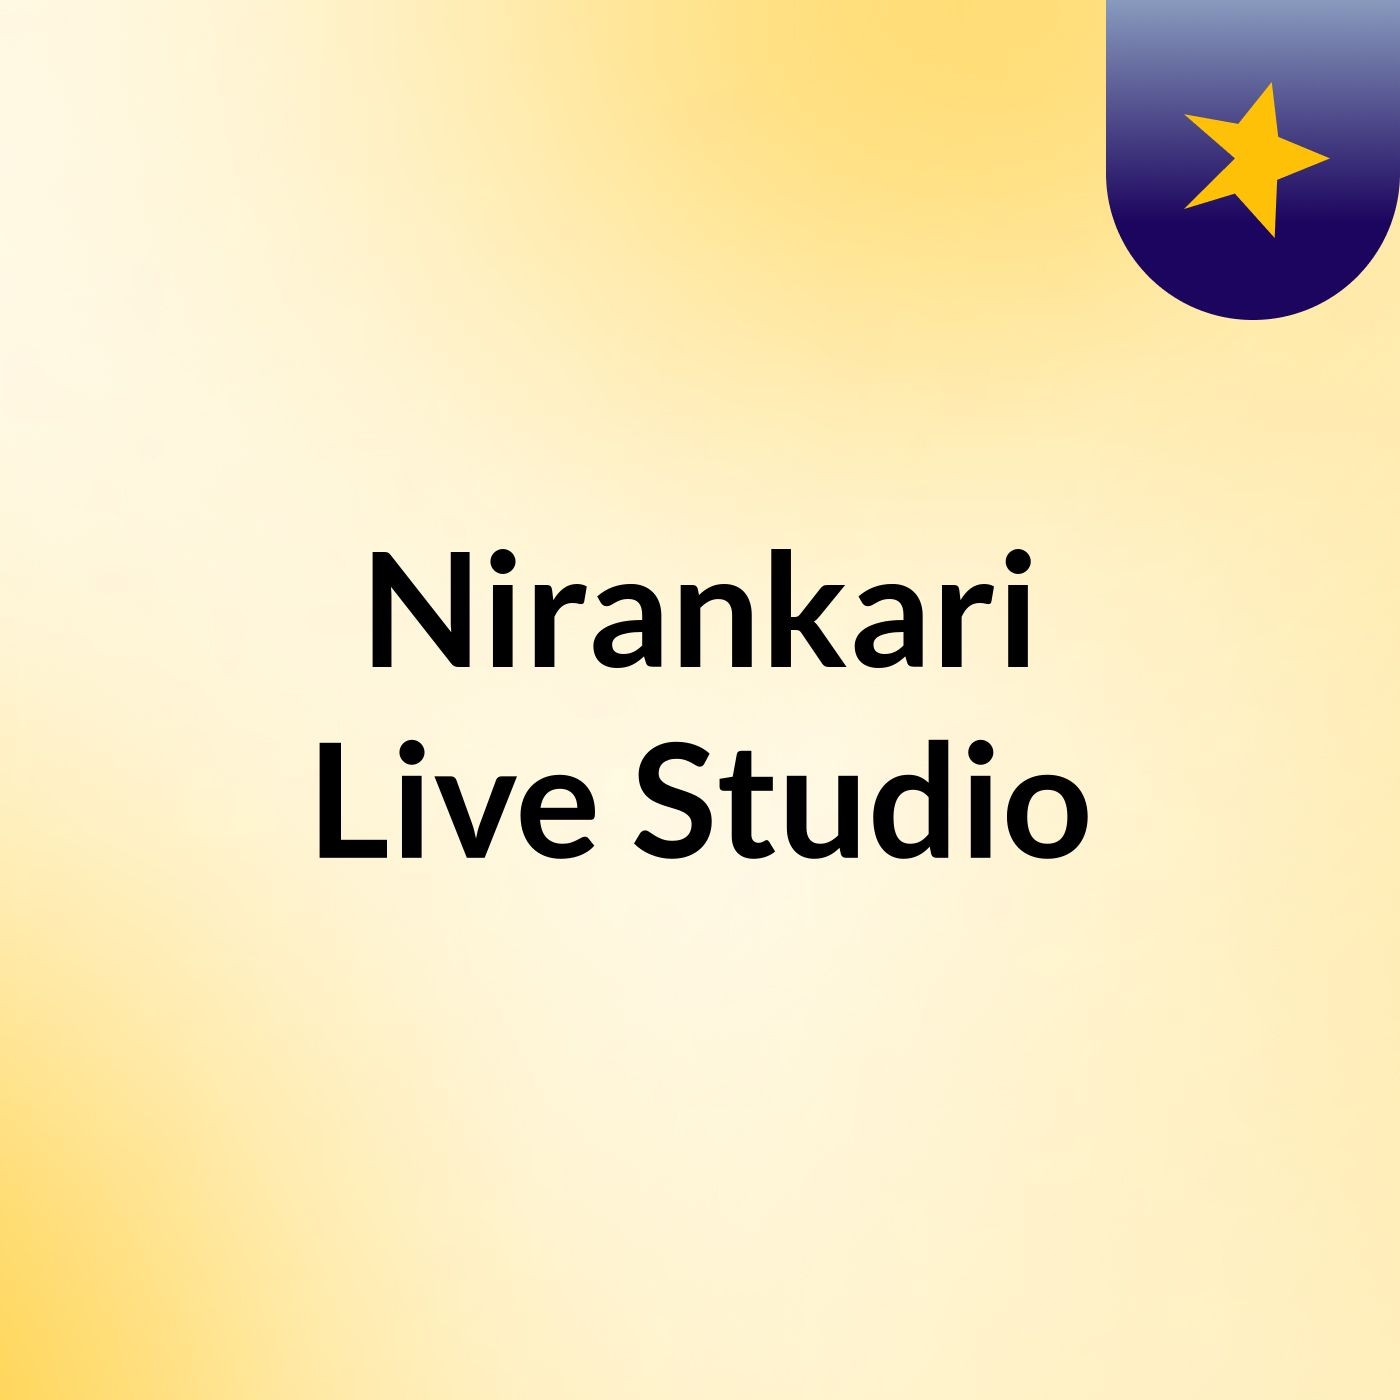 Nirankari Live Studio